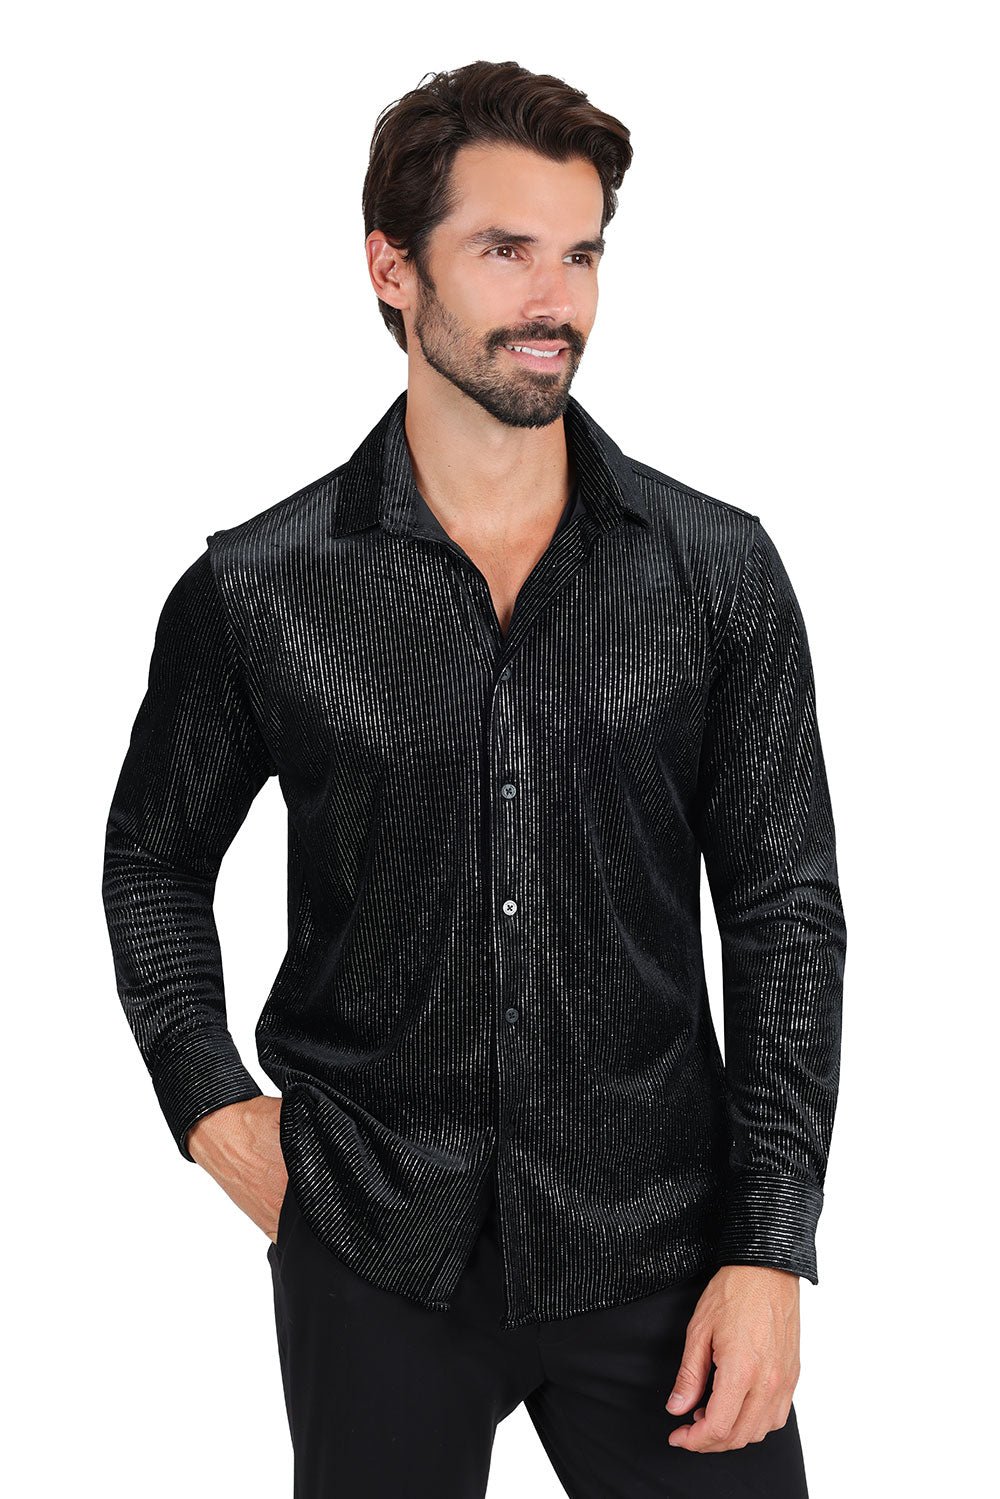 BARABAS Men's Shiny Metallic Print Design Long Sleeves Shirt 2SVL01 Black Silver